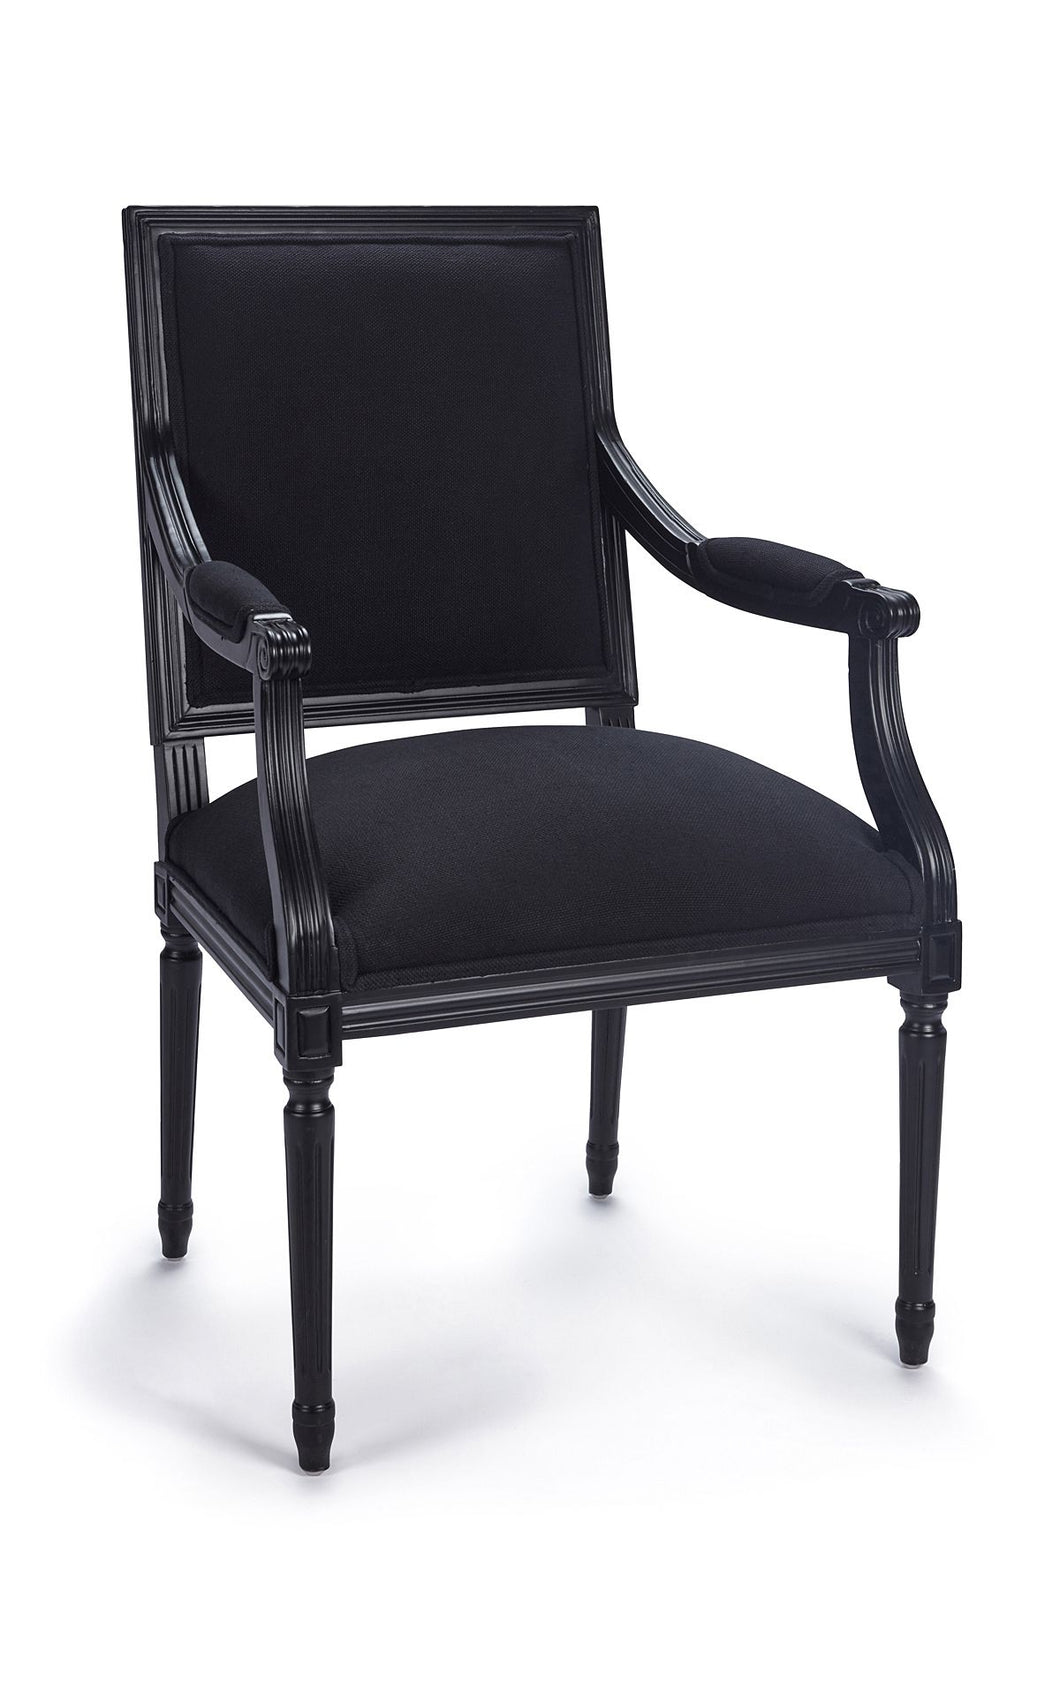 Nora Black Chair – Min order 2